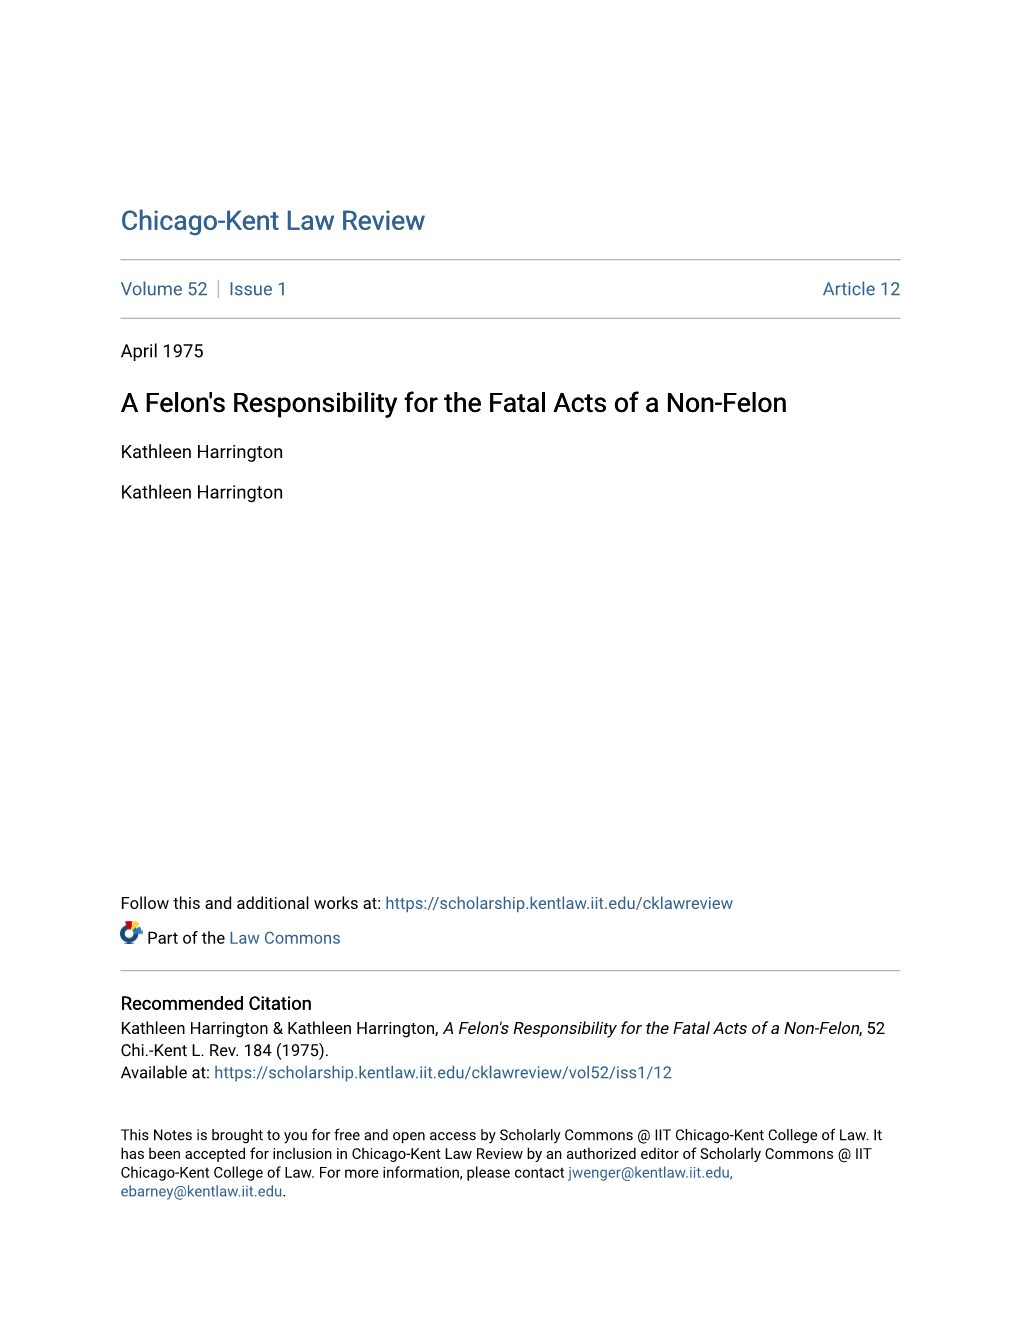 A Felon's Responsibility for the Fatal Acts of a Non-Felon